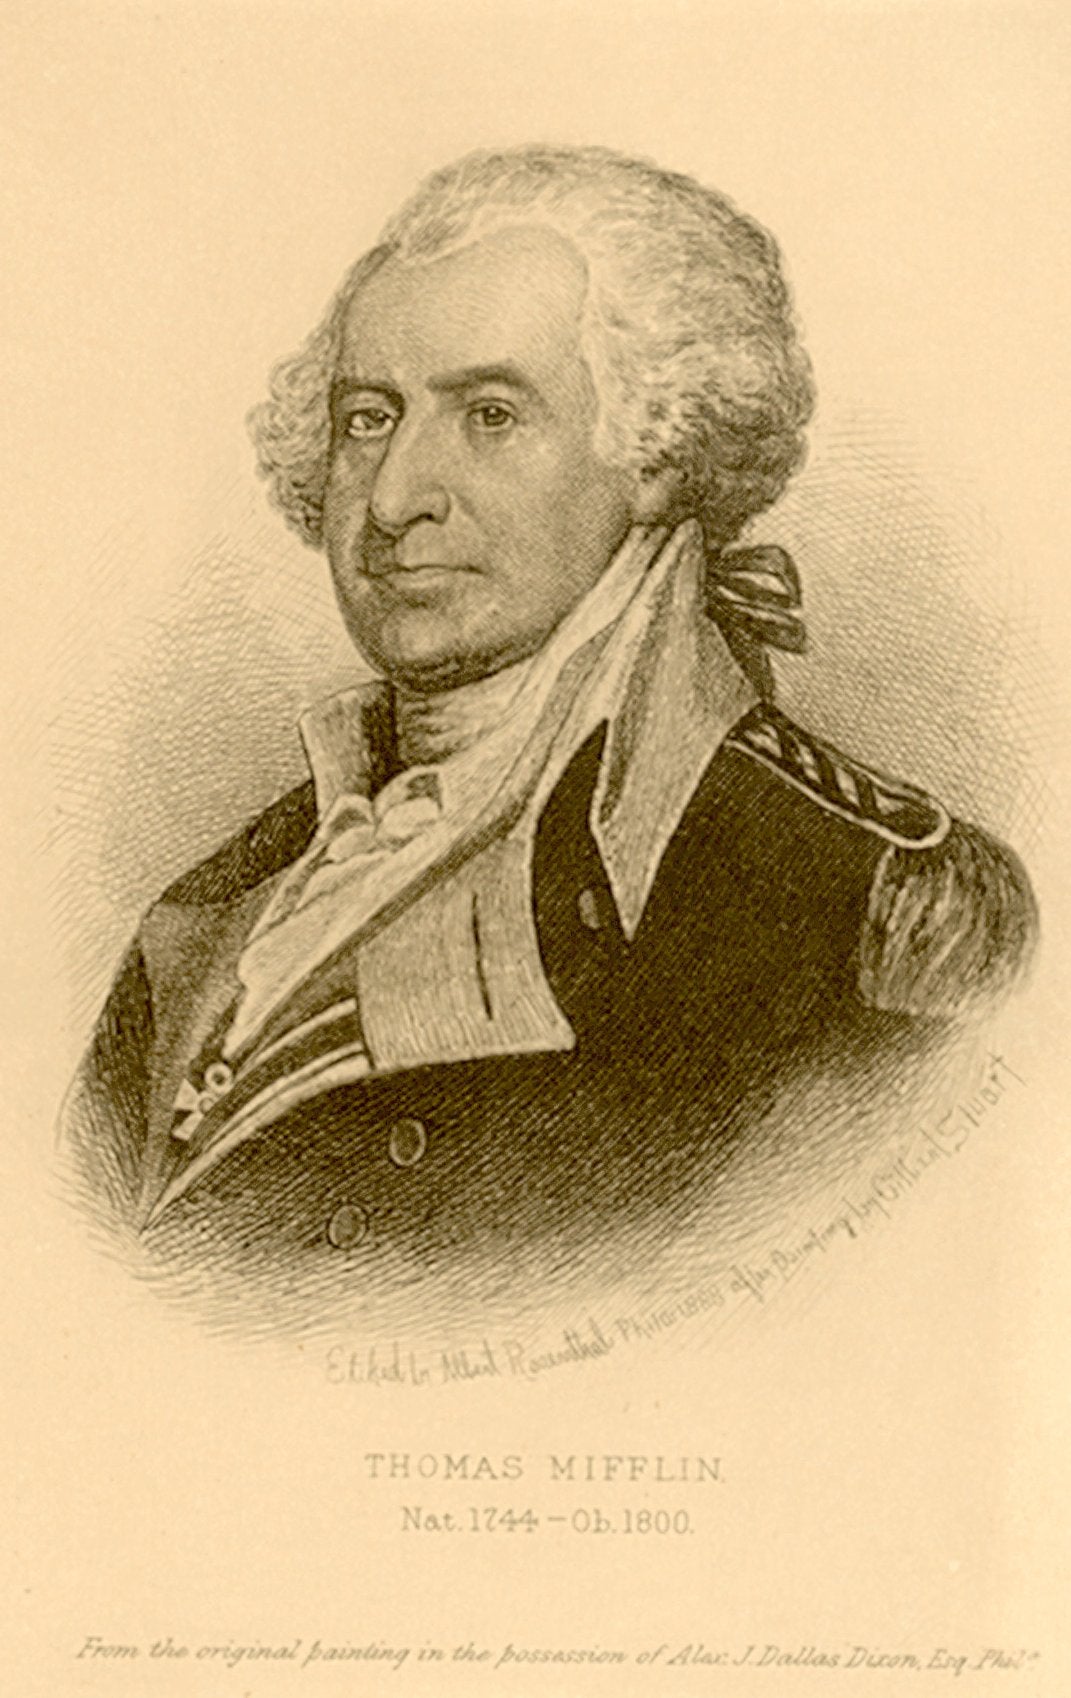 Thomas Mifflin, c. 1790